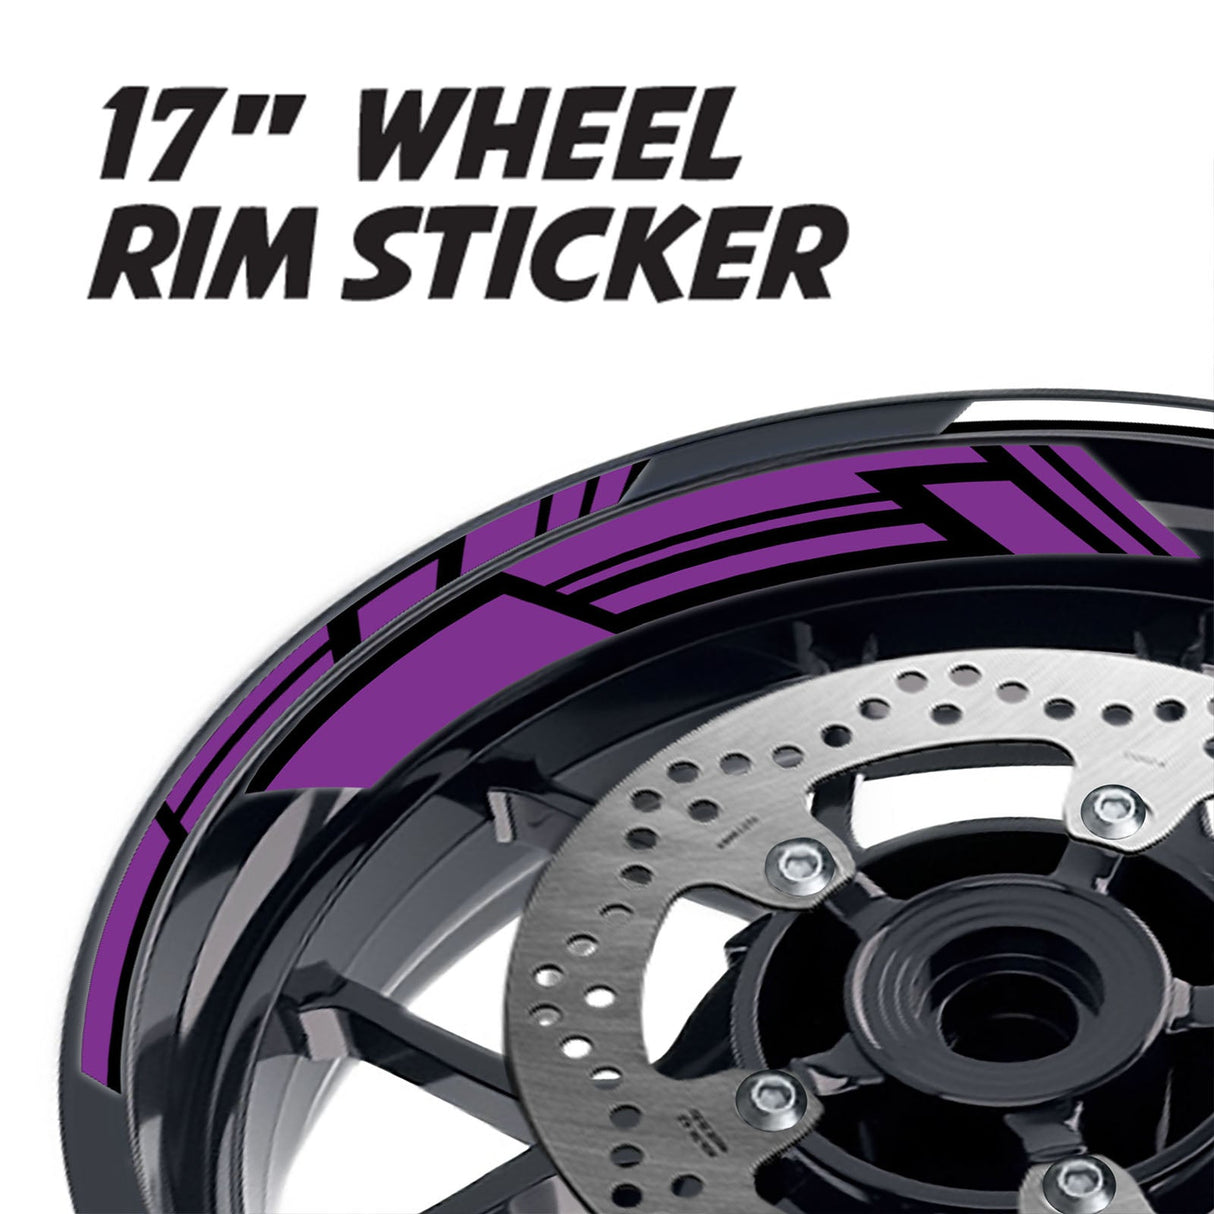 StickerBao Purple 17 inch GP19 Platinum Inner Edge Rim Sticker Universal Motorcycle Rim Wheel Decal Racing For Honda